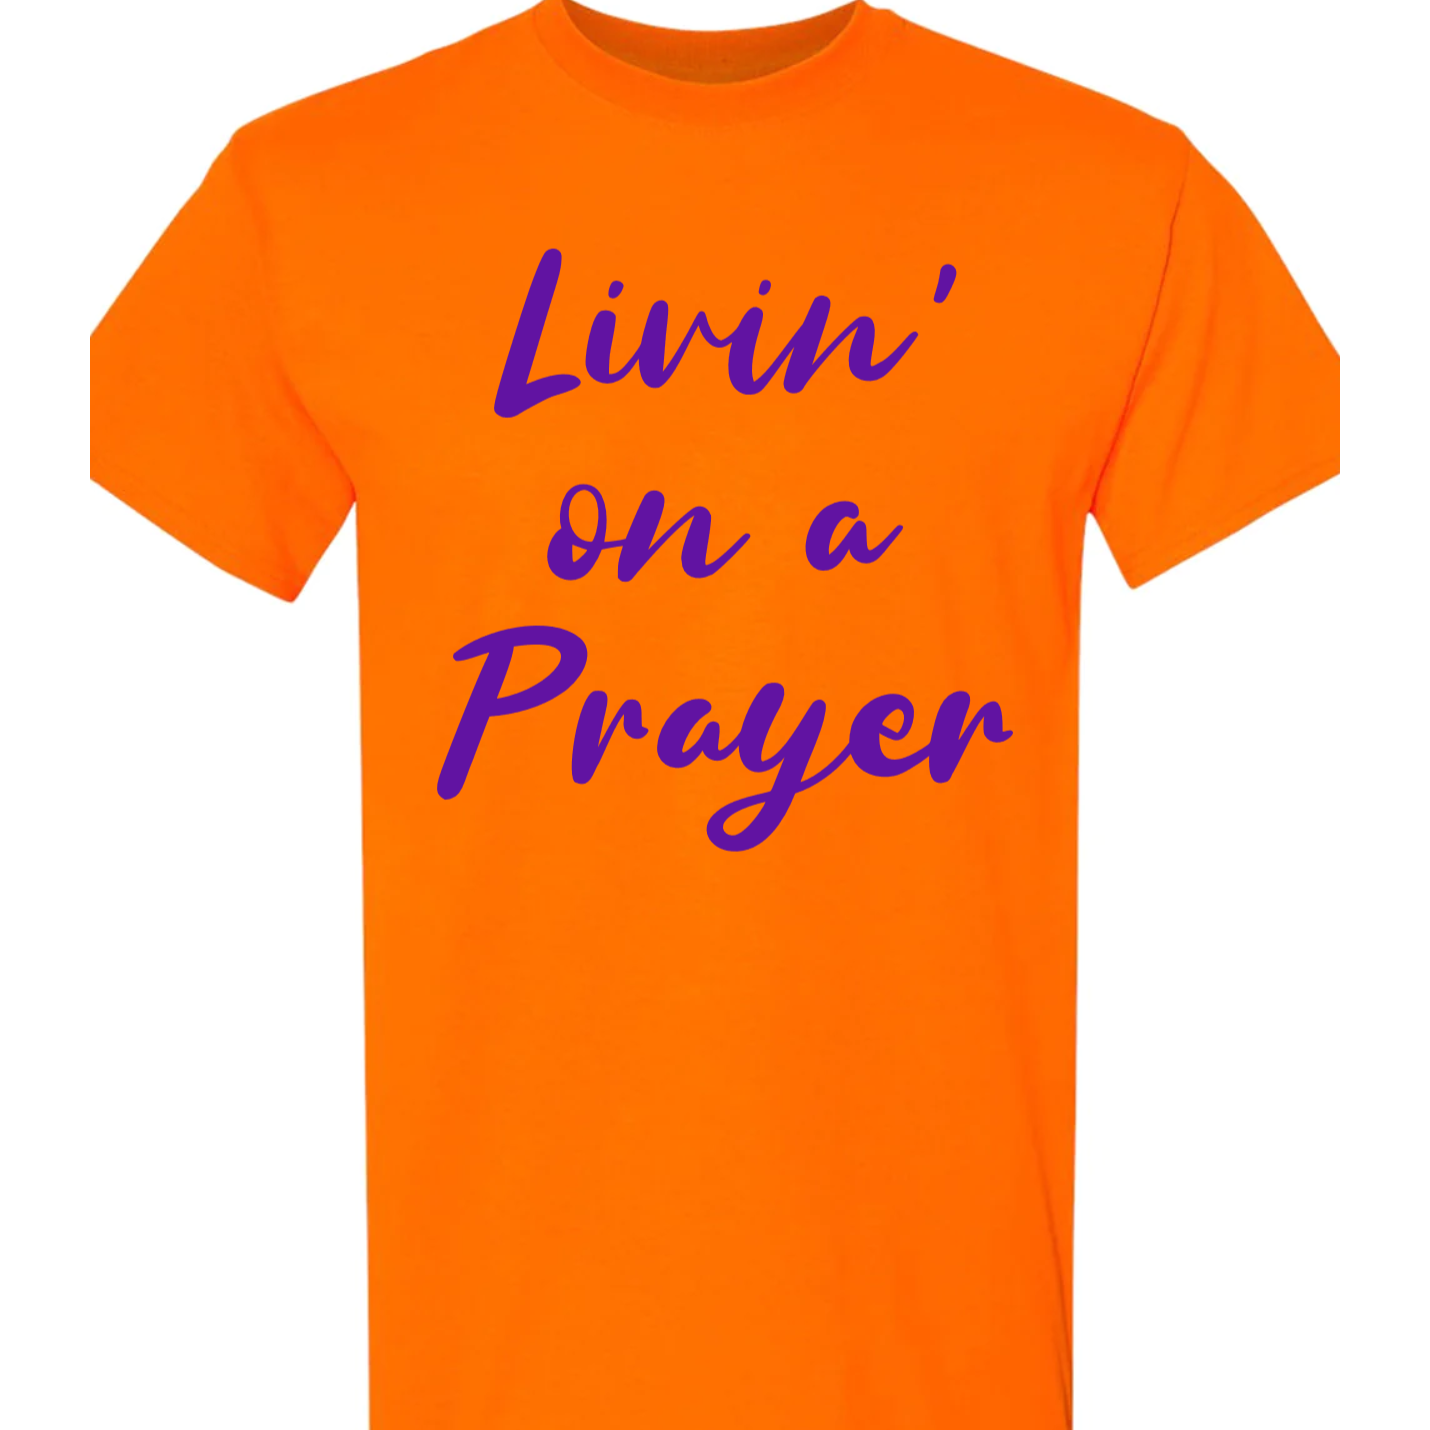 Livin' on a Prayer Vinyl Graphic for Shirts